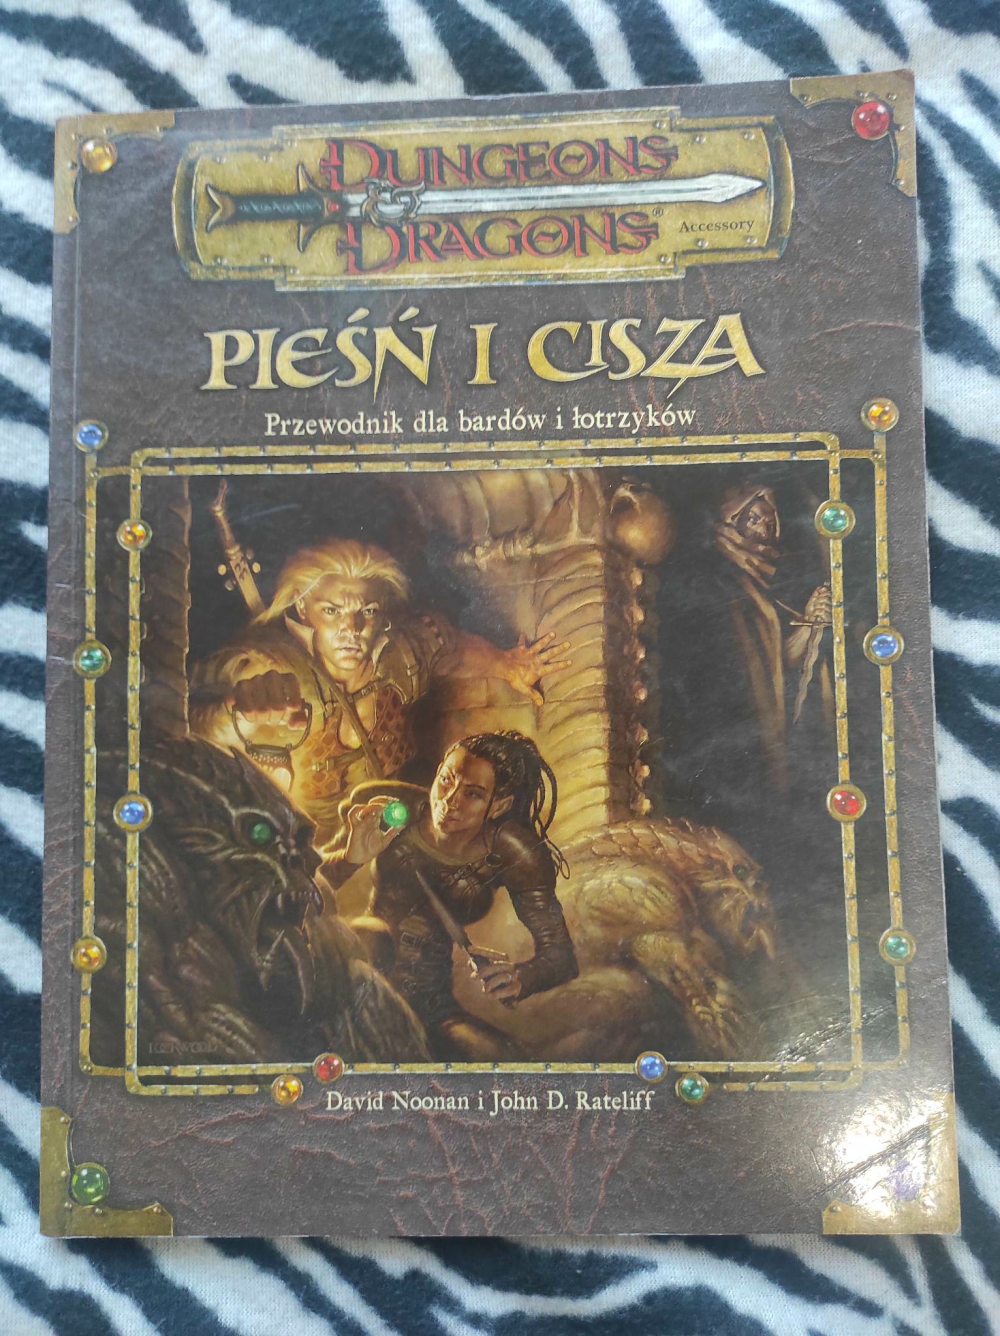 Pieśń i cisza -Dungeons and Dragons